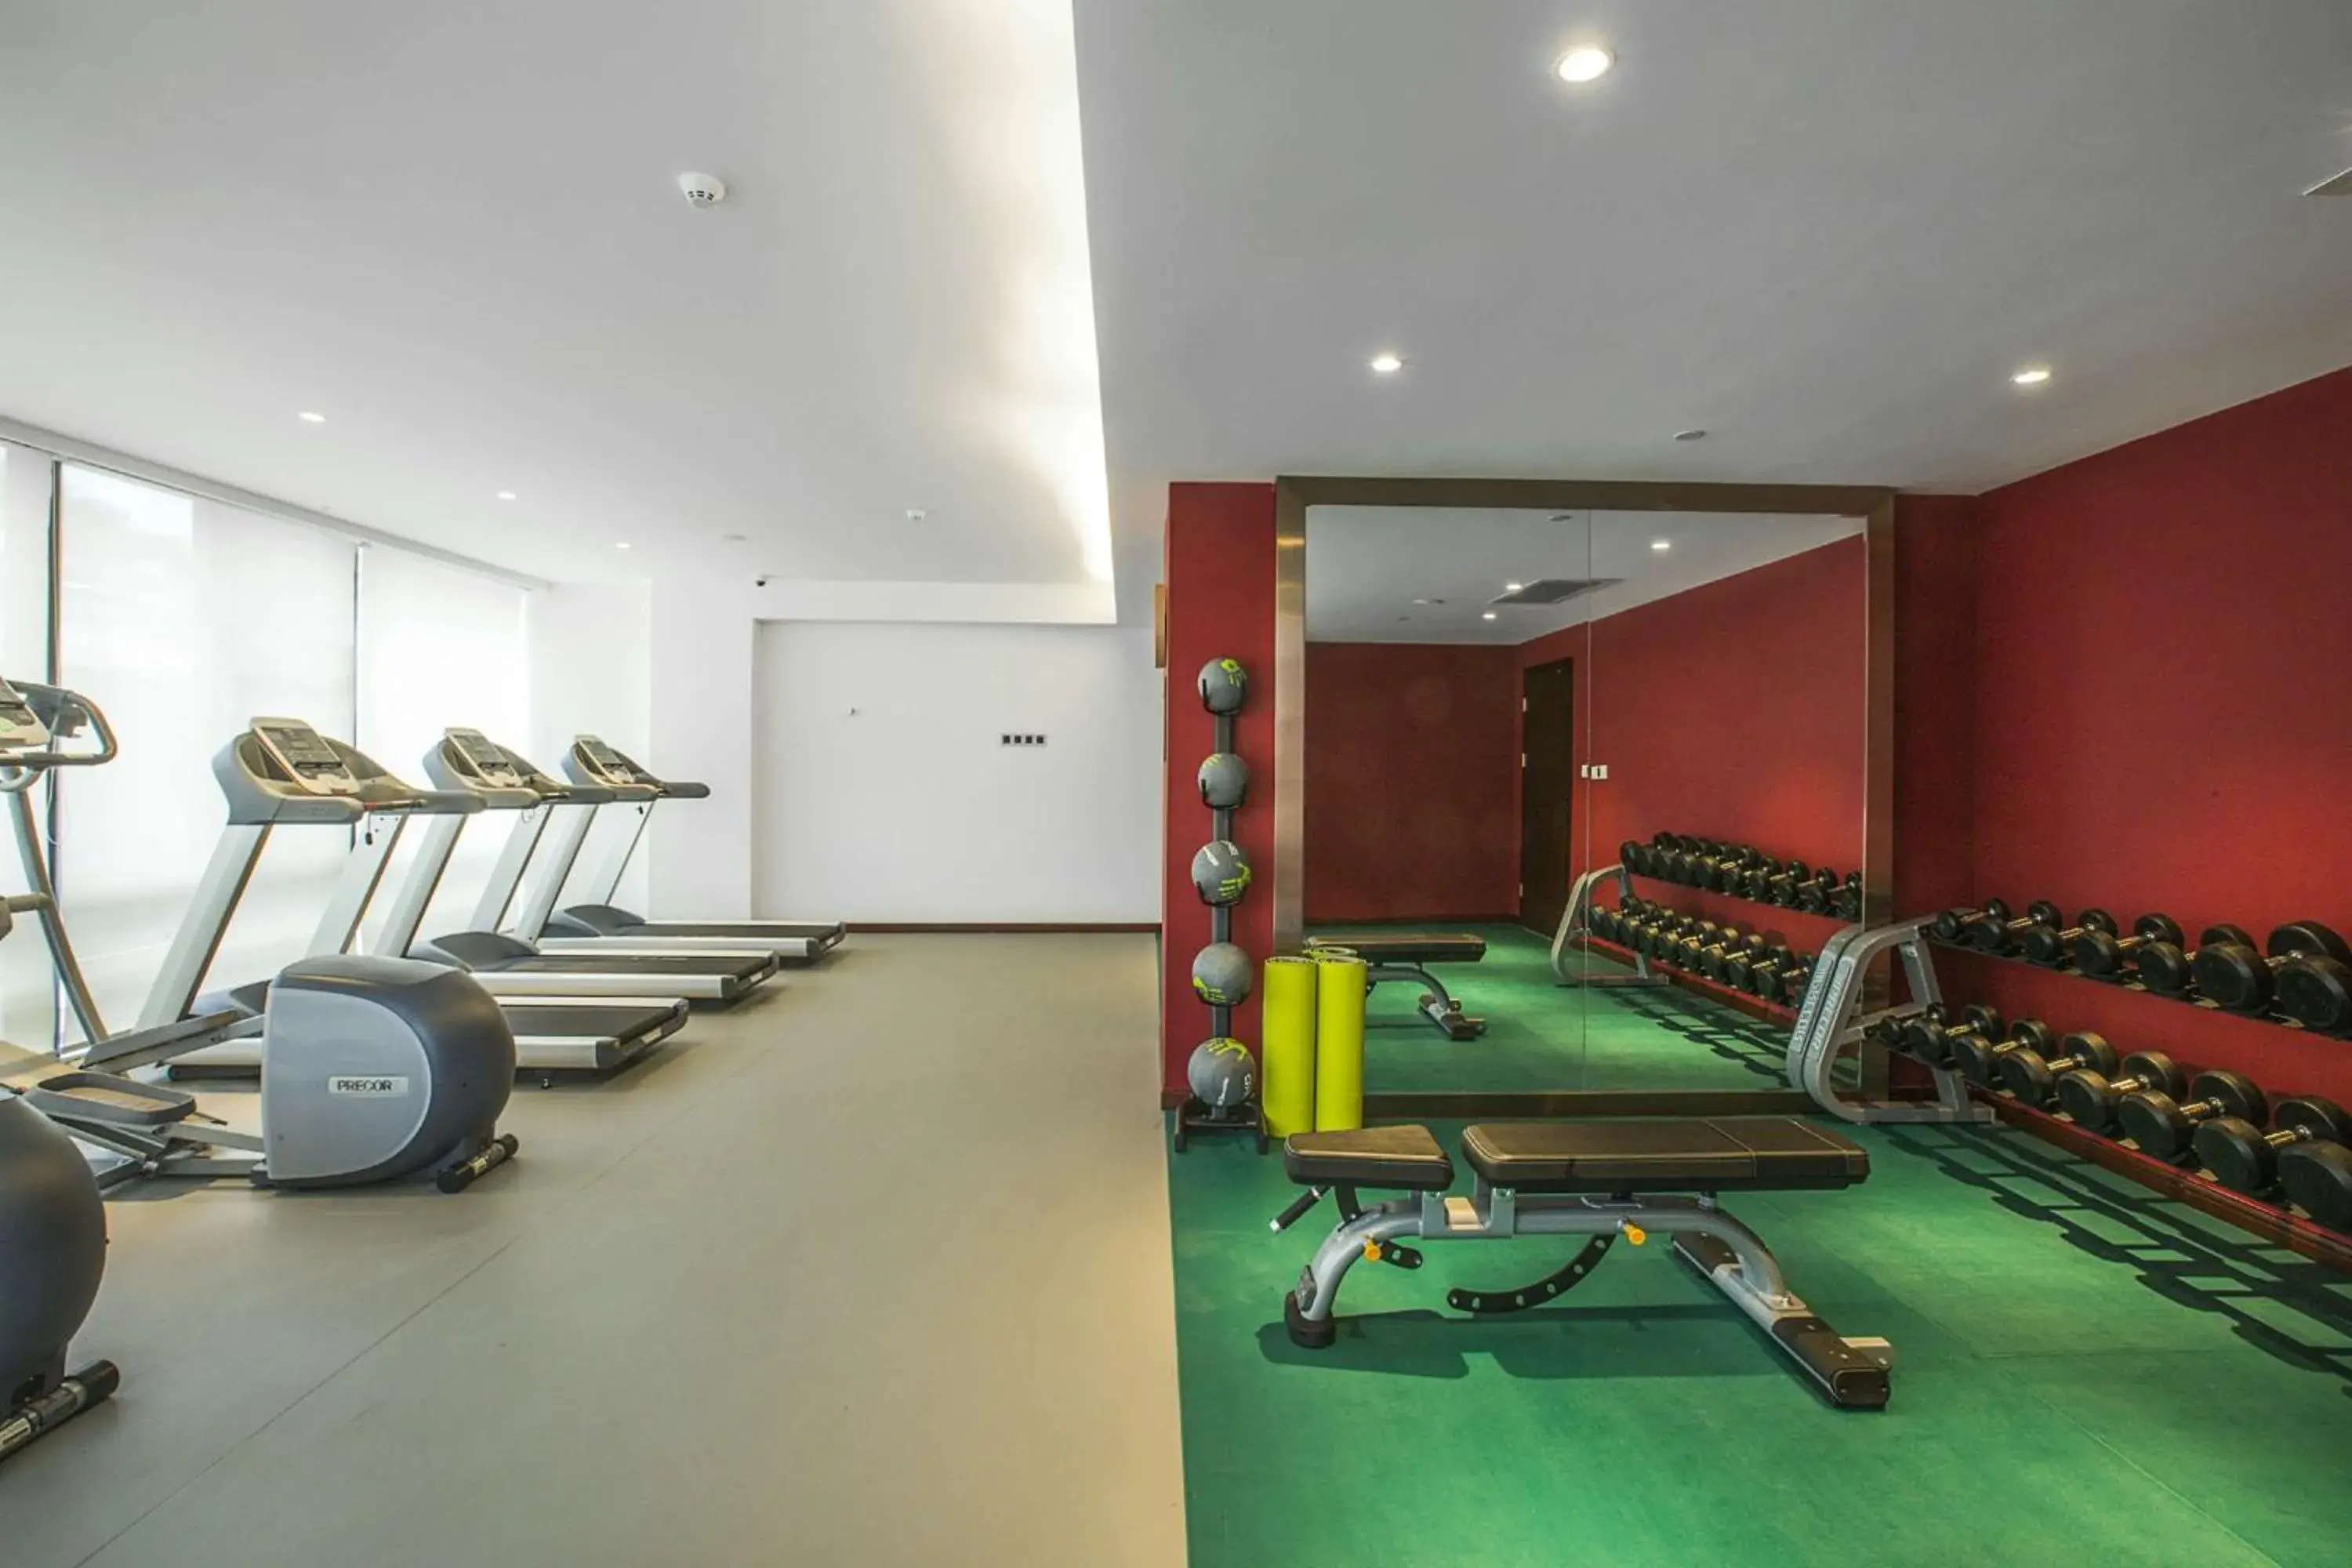 Fitness centre/facilities, Fitness Center/Facilities in Hilton Garden Inn Guiyang, China